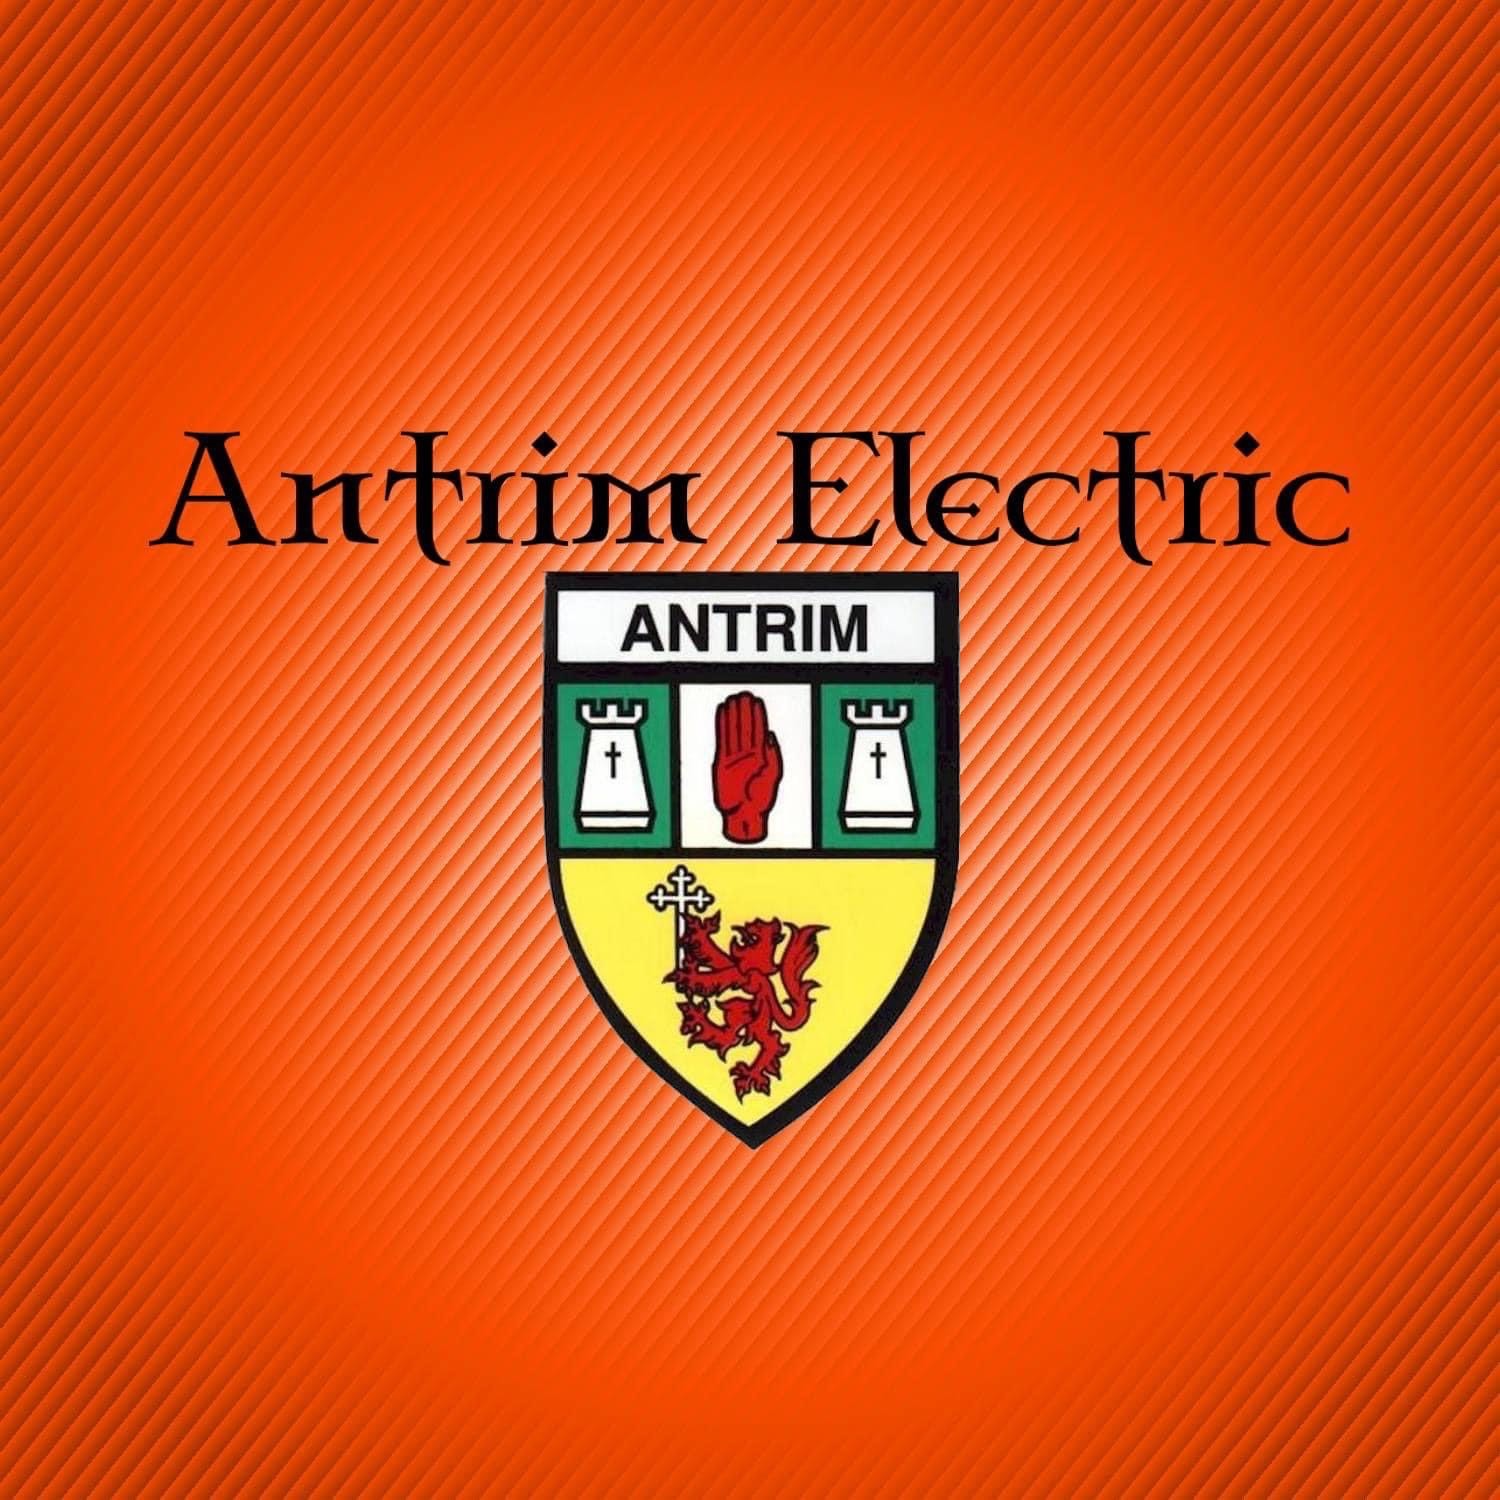 Antrim Electric